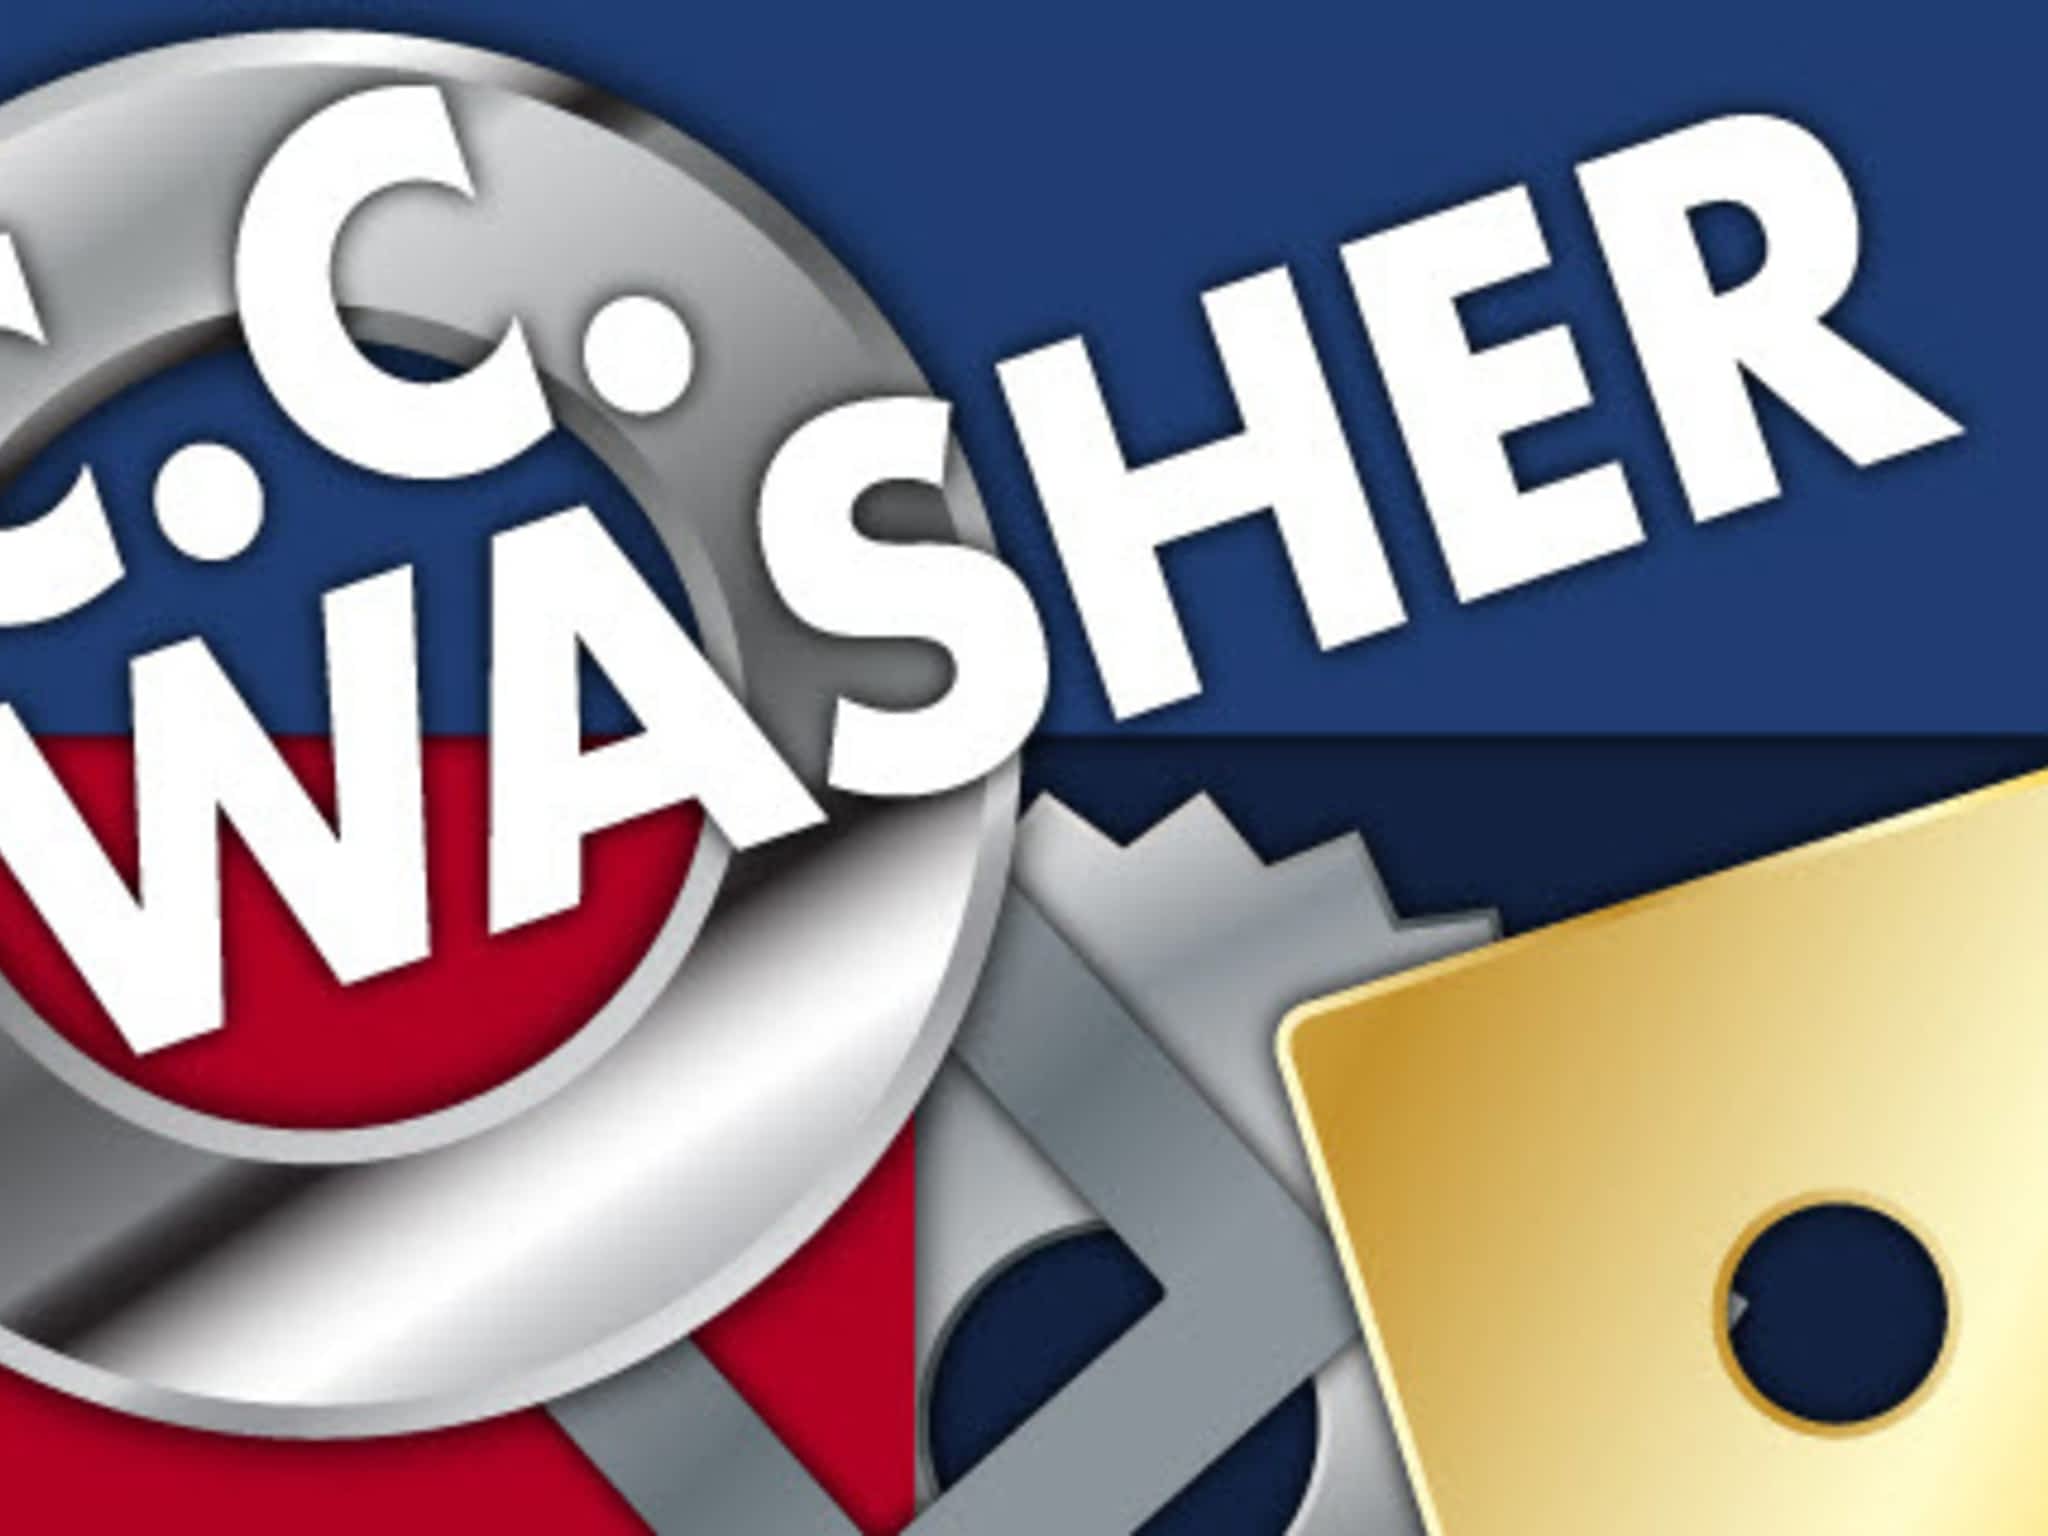 photo C C Washer Manufacturing Co Ltd